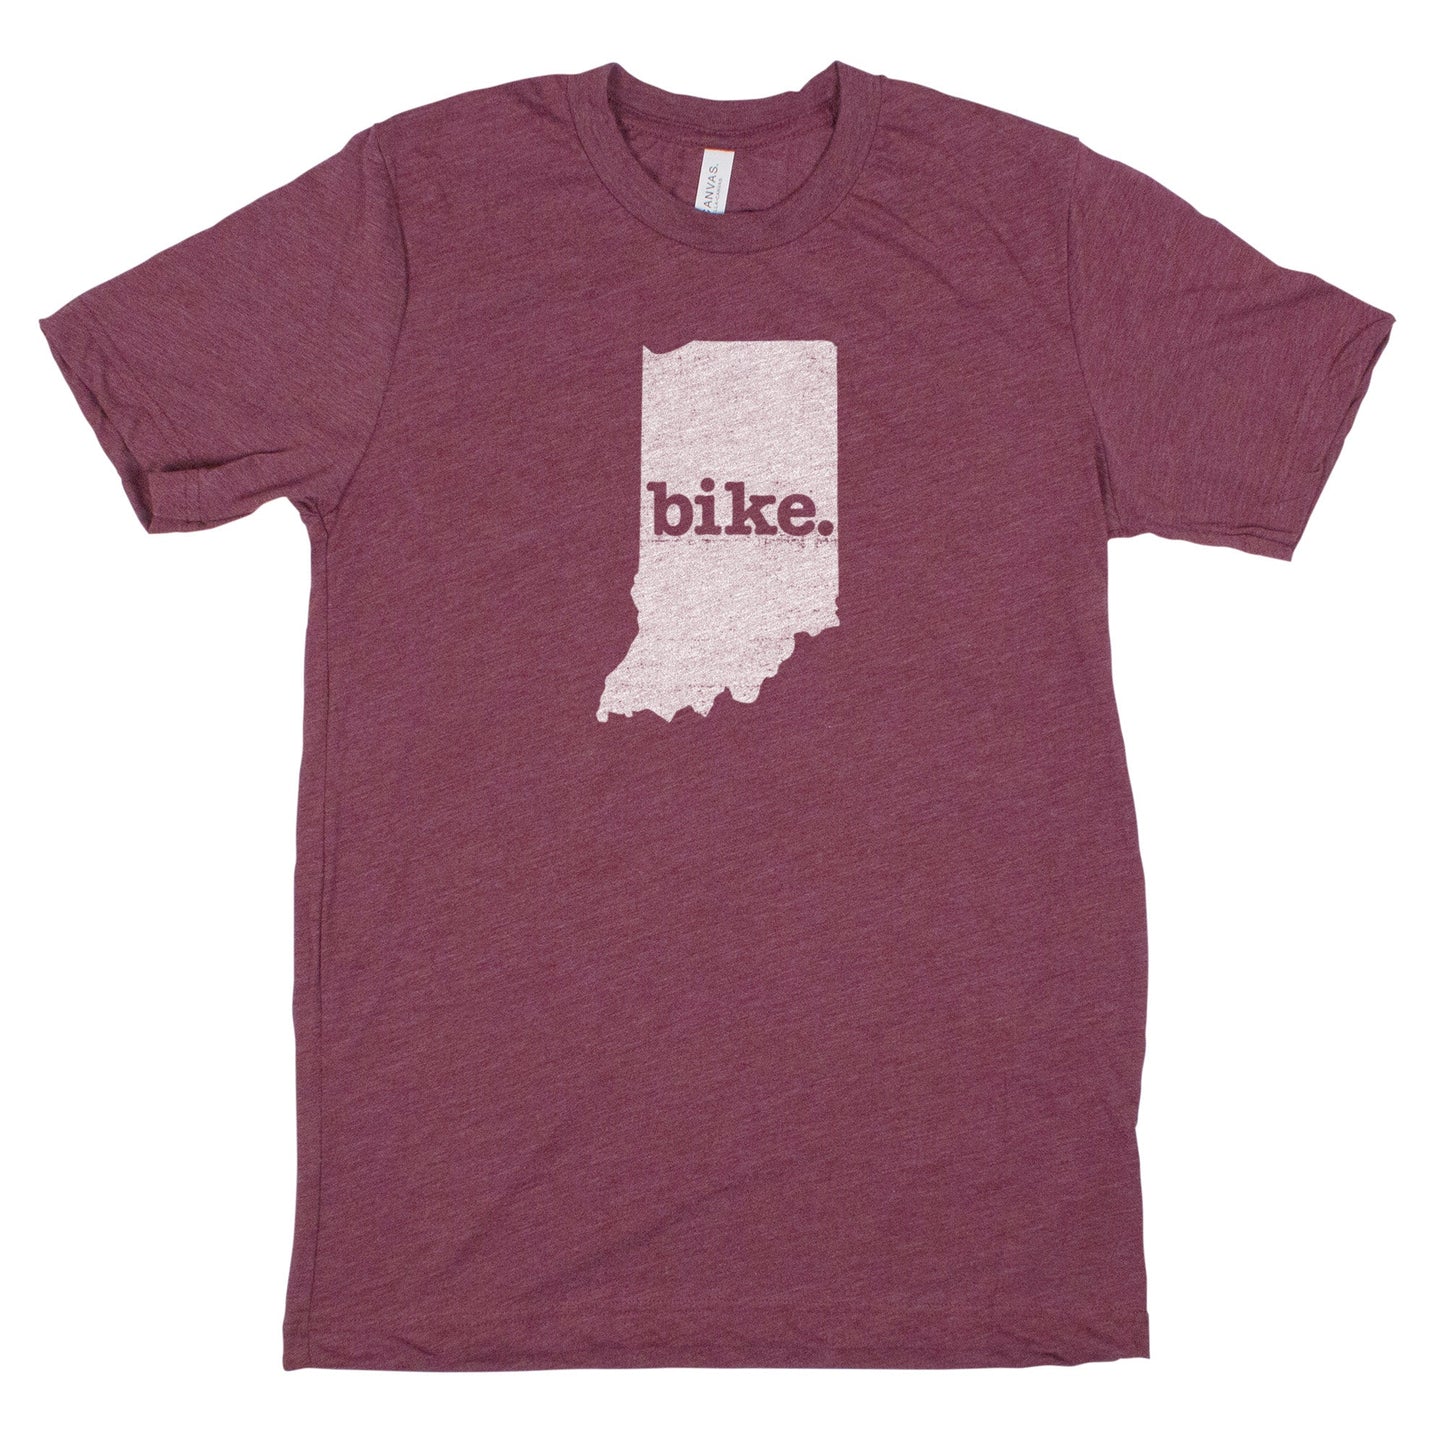 bike. Men's Unisex T-Shirt - Indiana